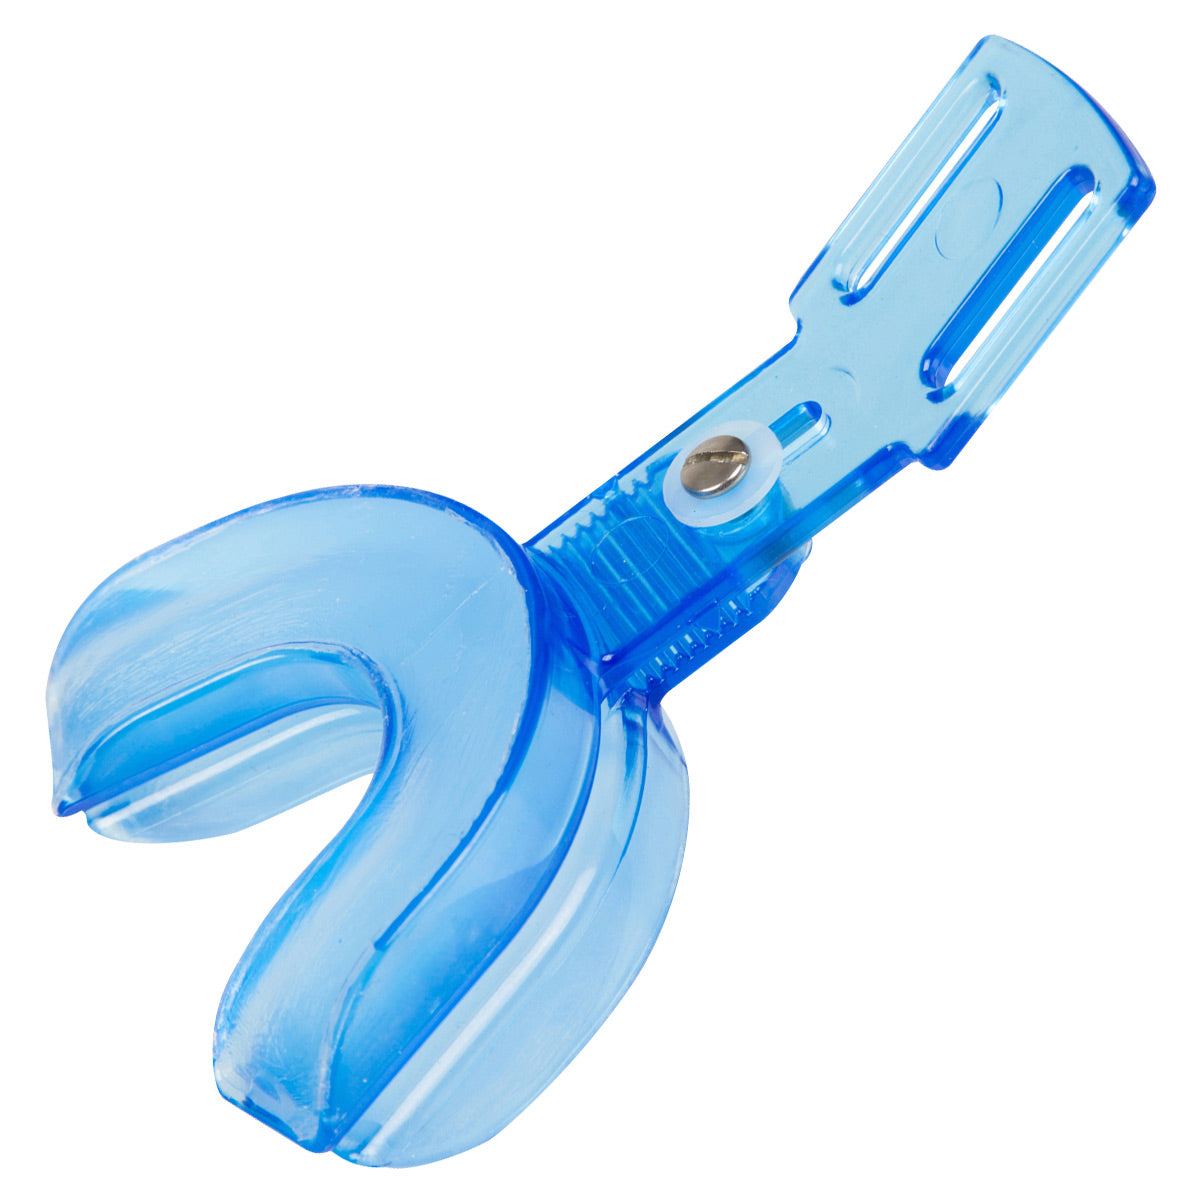 Double Boil 'n Bite Mouthpiece for CPAP PRO & ApneaPAP CPAP/BiPAP Masks